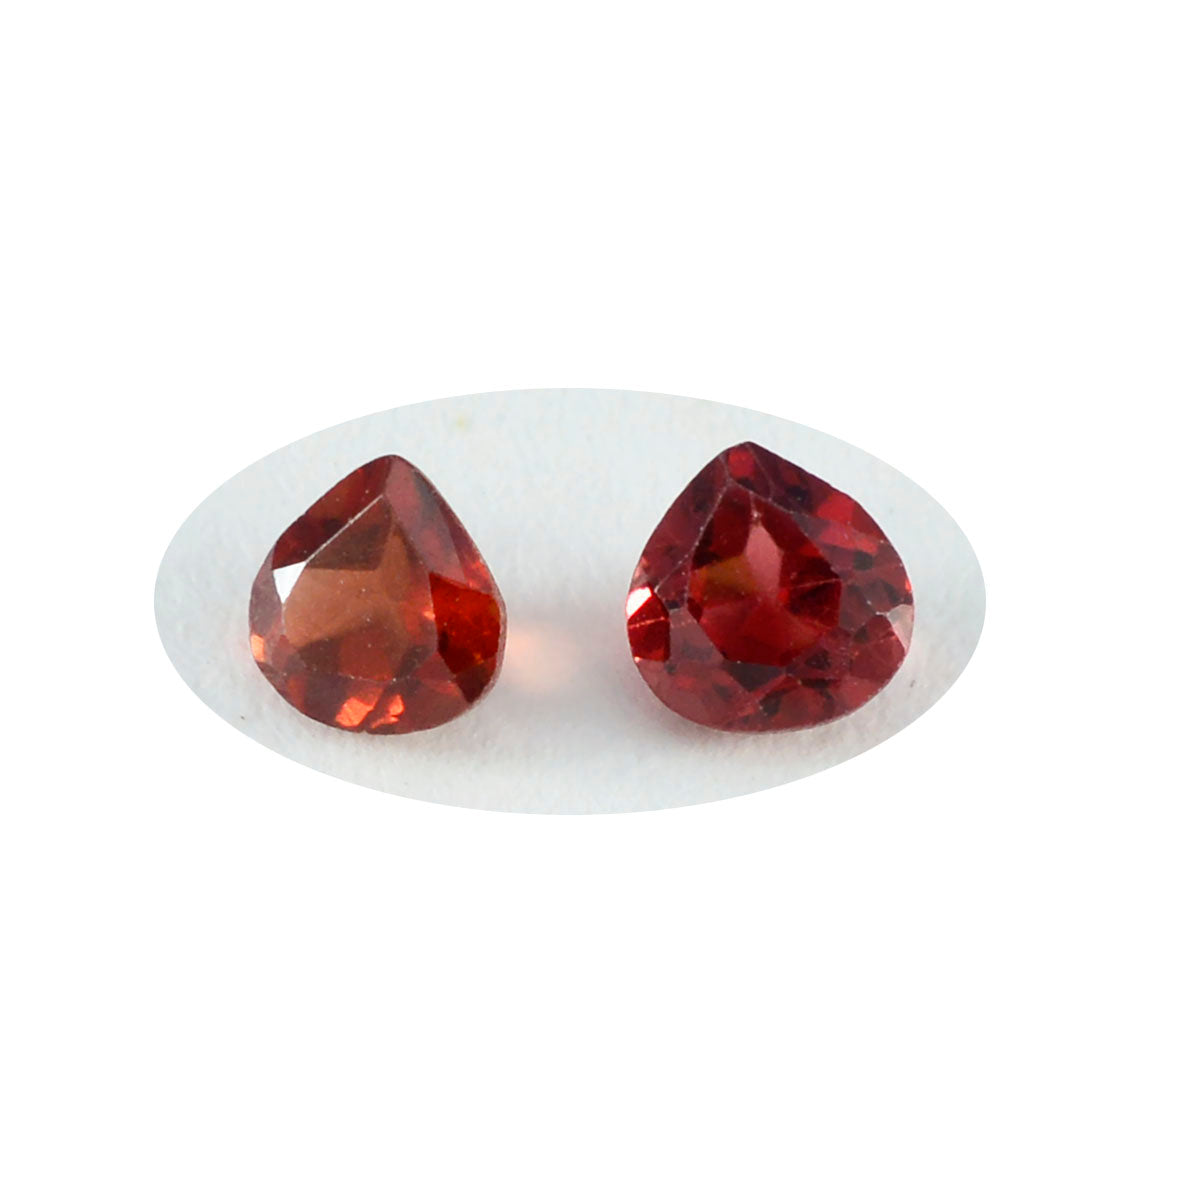 Riyogems 1PC Natural Red Garnet Faceted 7x7 mm Heart Shape astonishing Quality Loose Gemstone